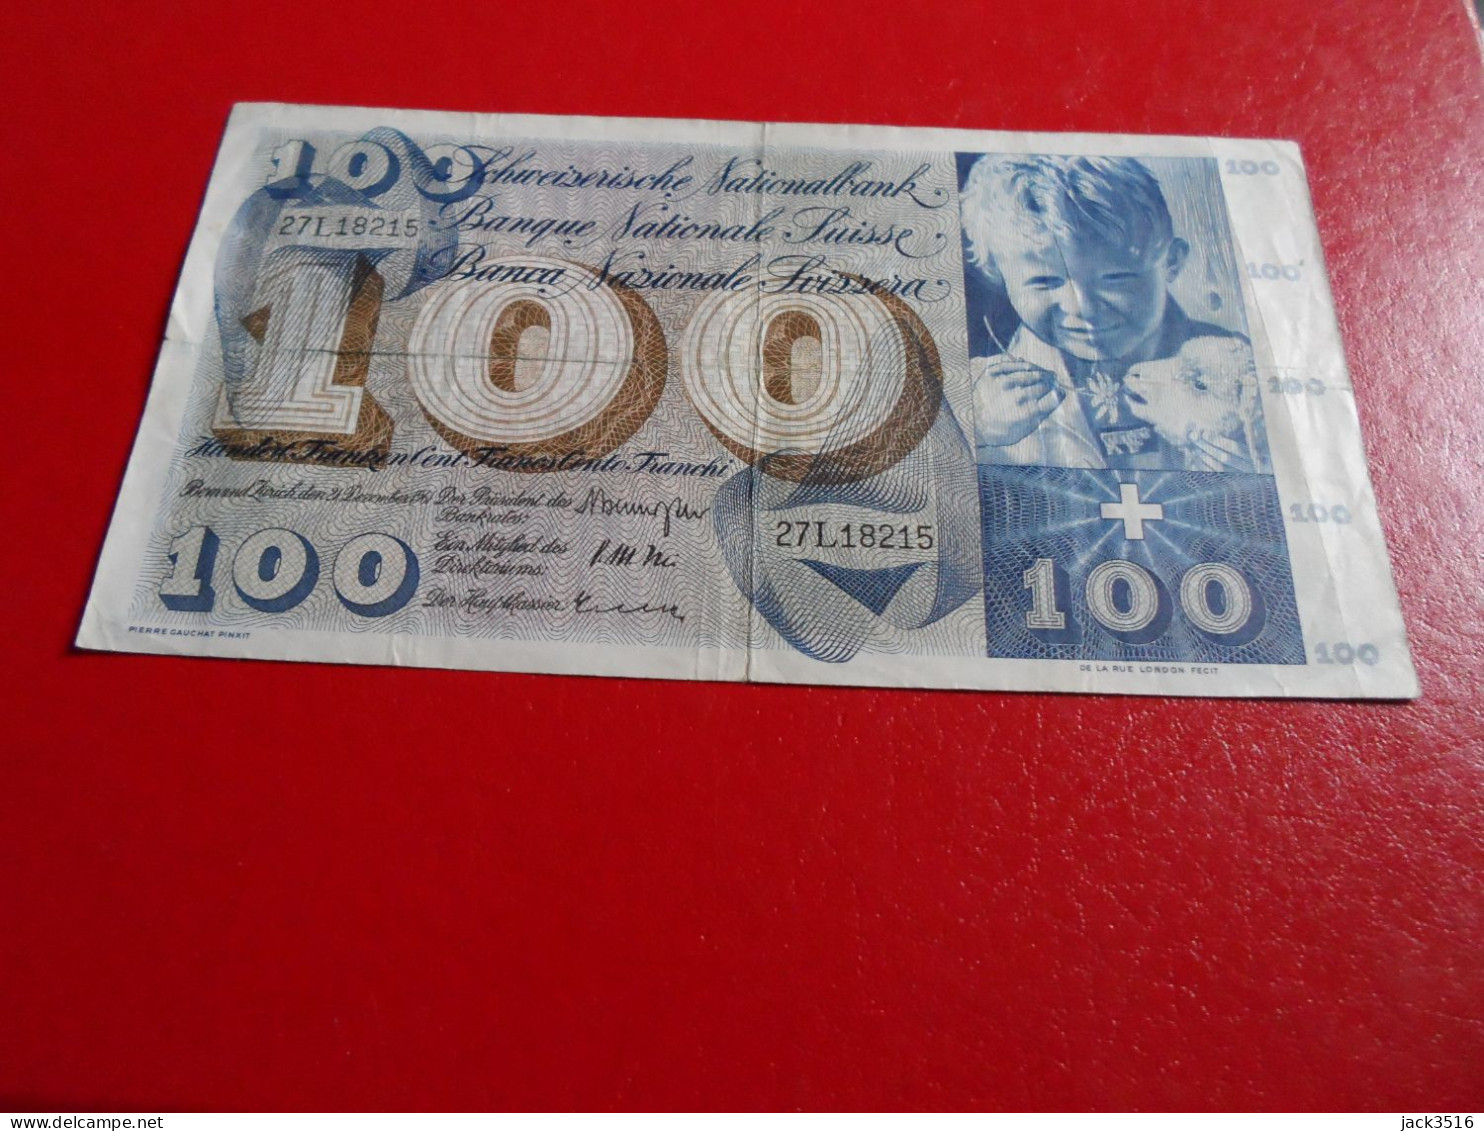 Billet 100 Francs 1961 Gauchet - Switzerland